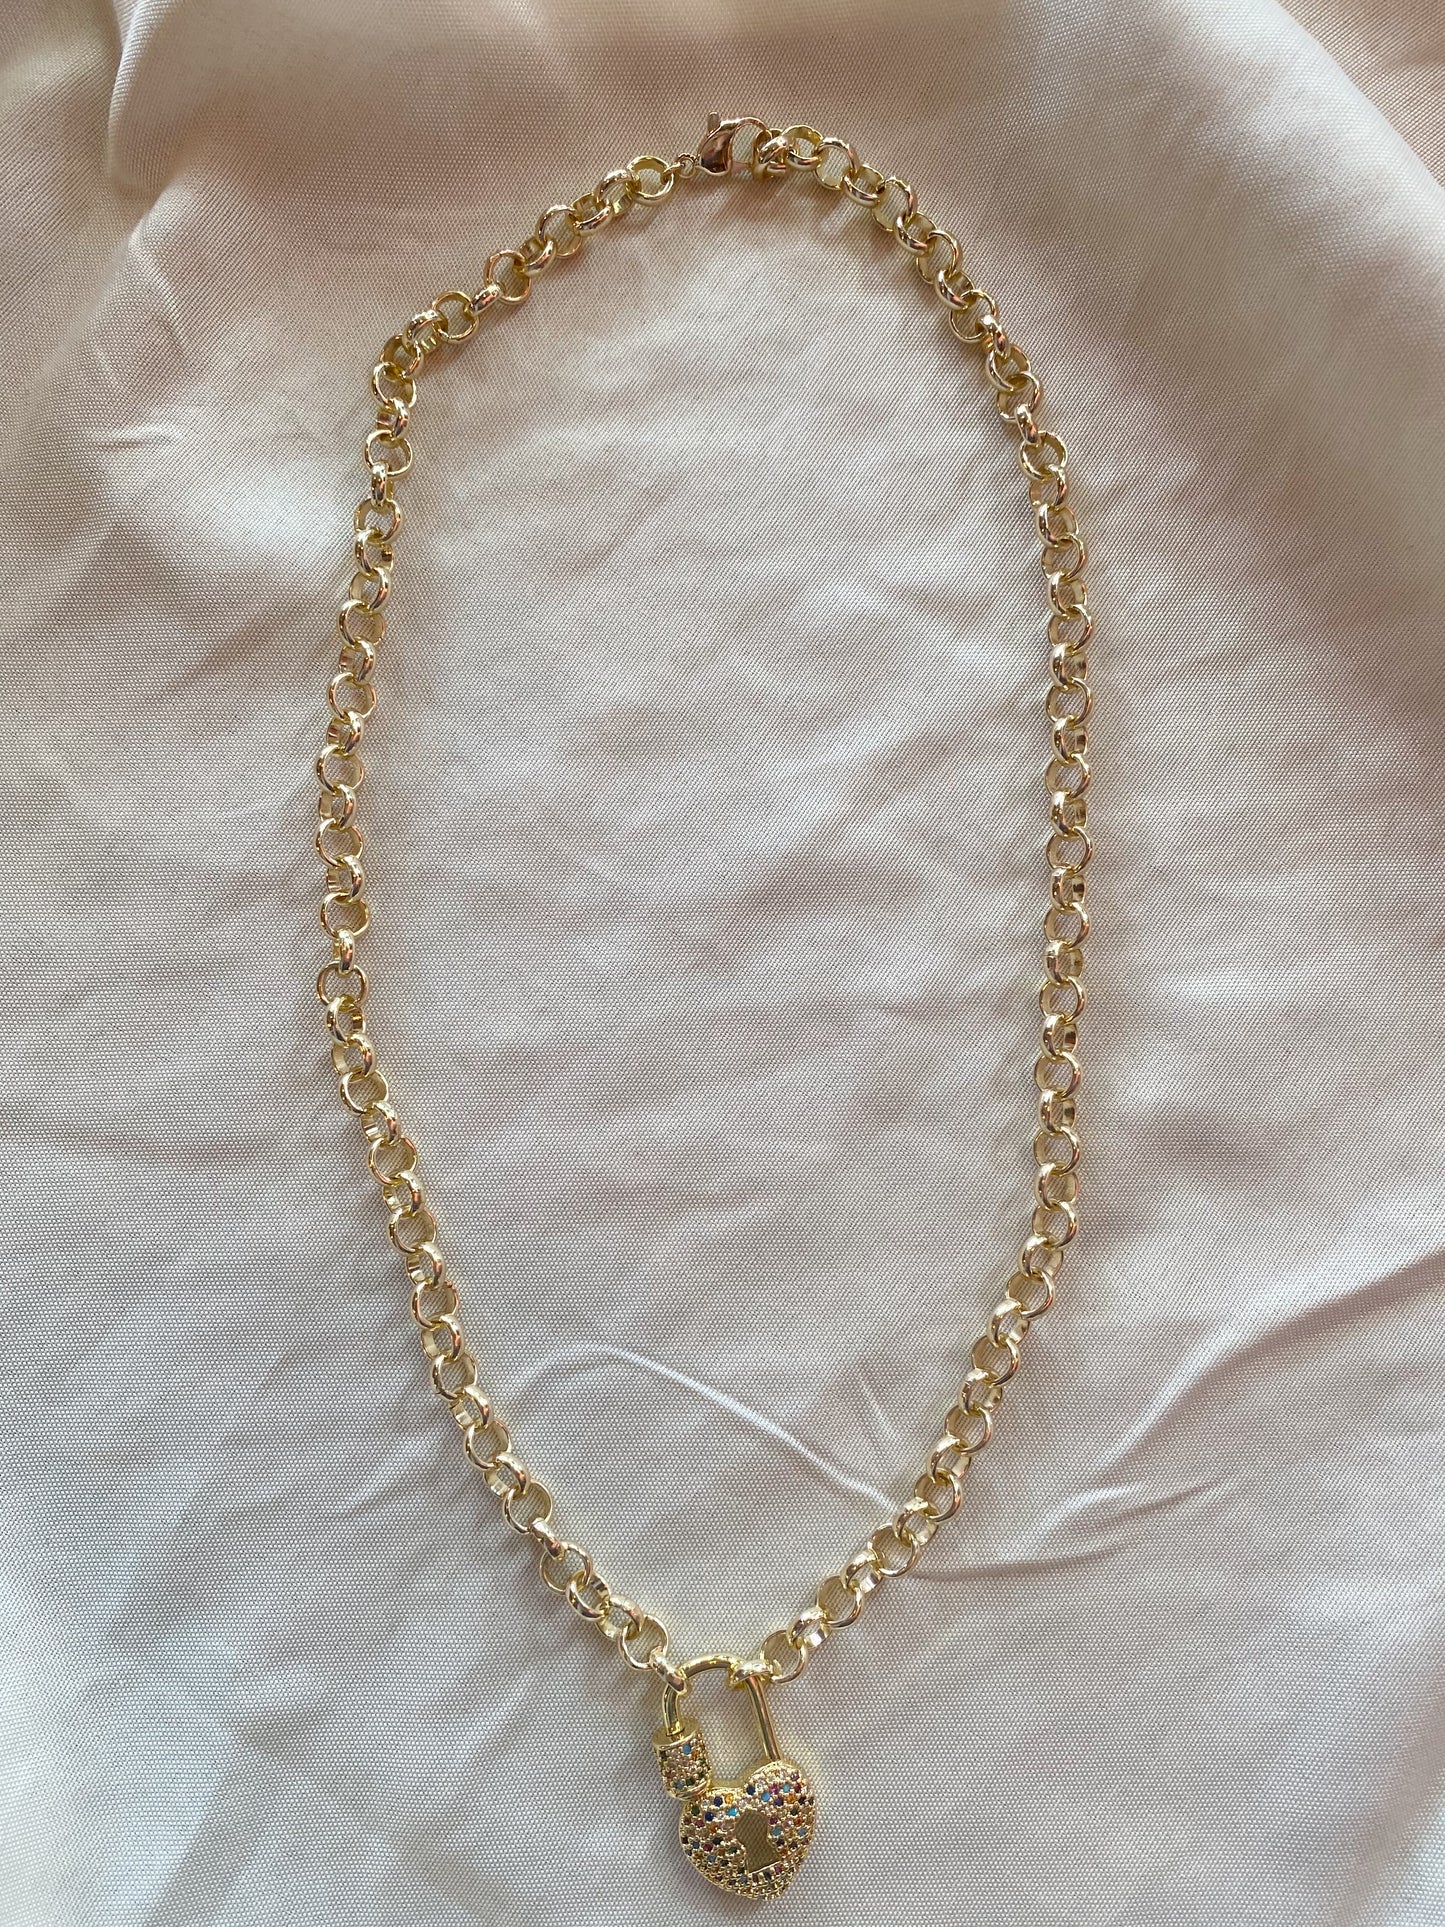 Rhinestone Heart Lock pendant chain necklace